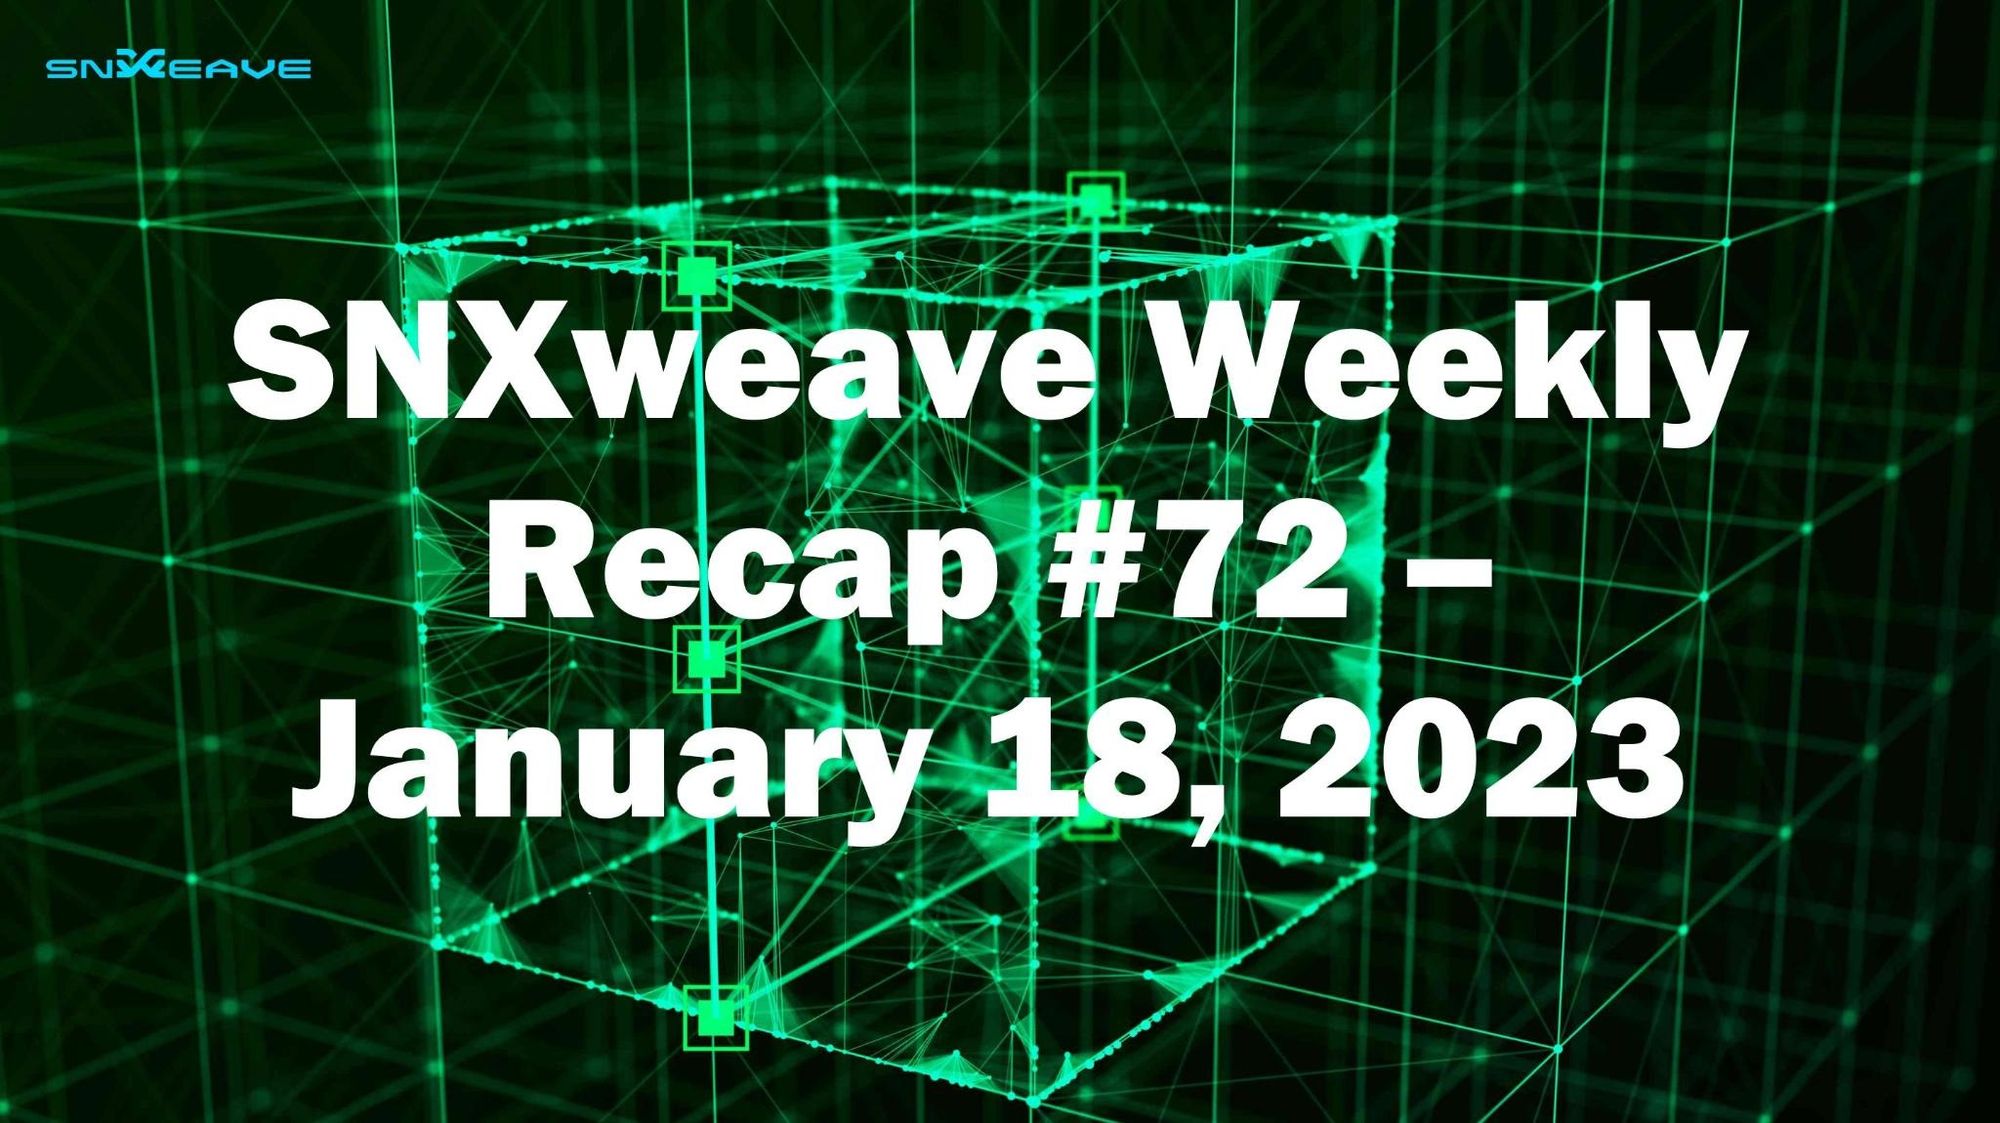 SNXweave Weekly Recap 72